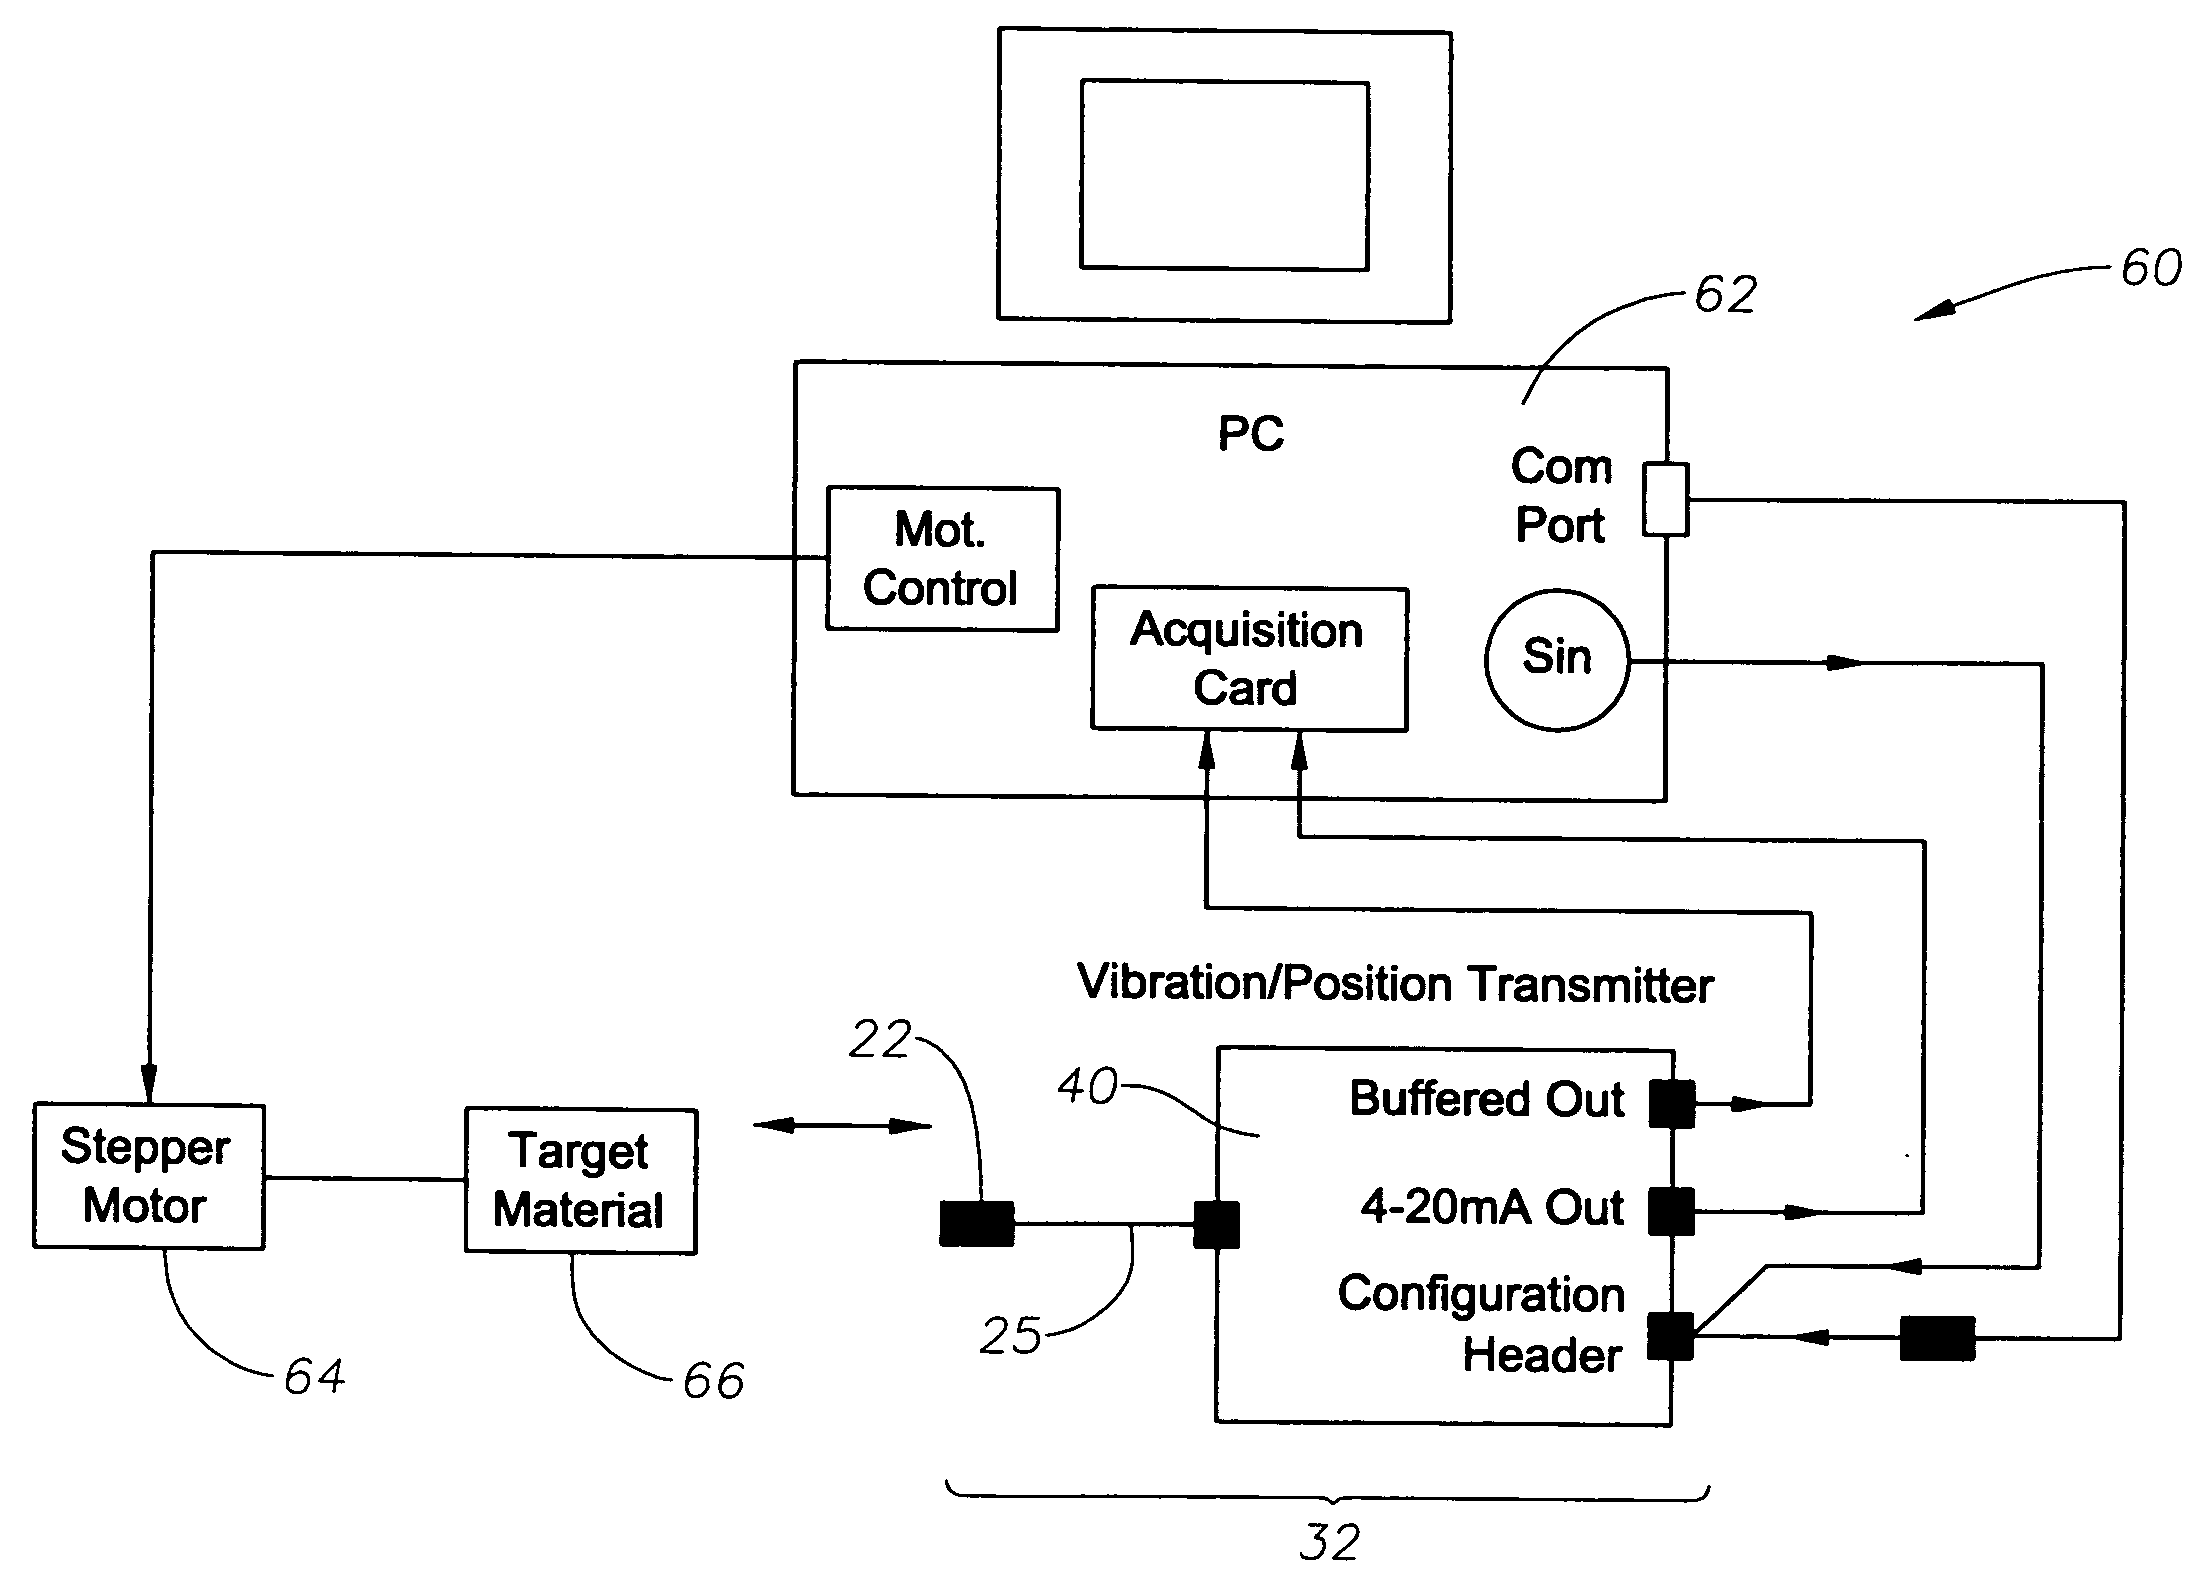 Proximity probe transmitter